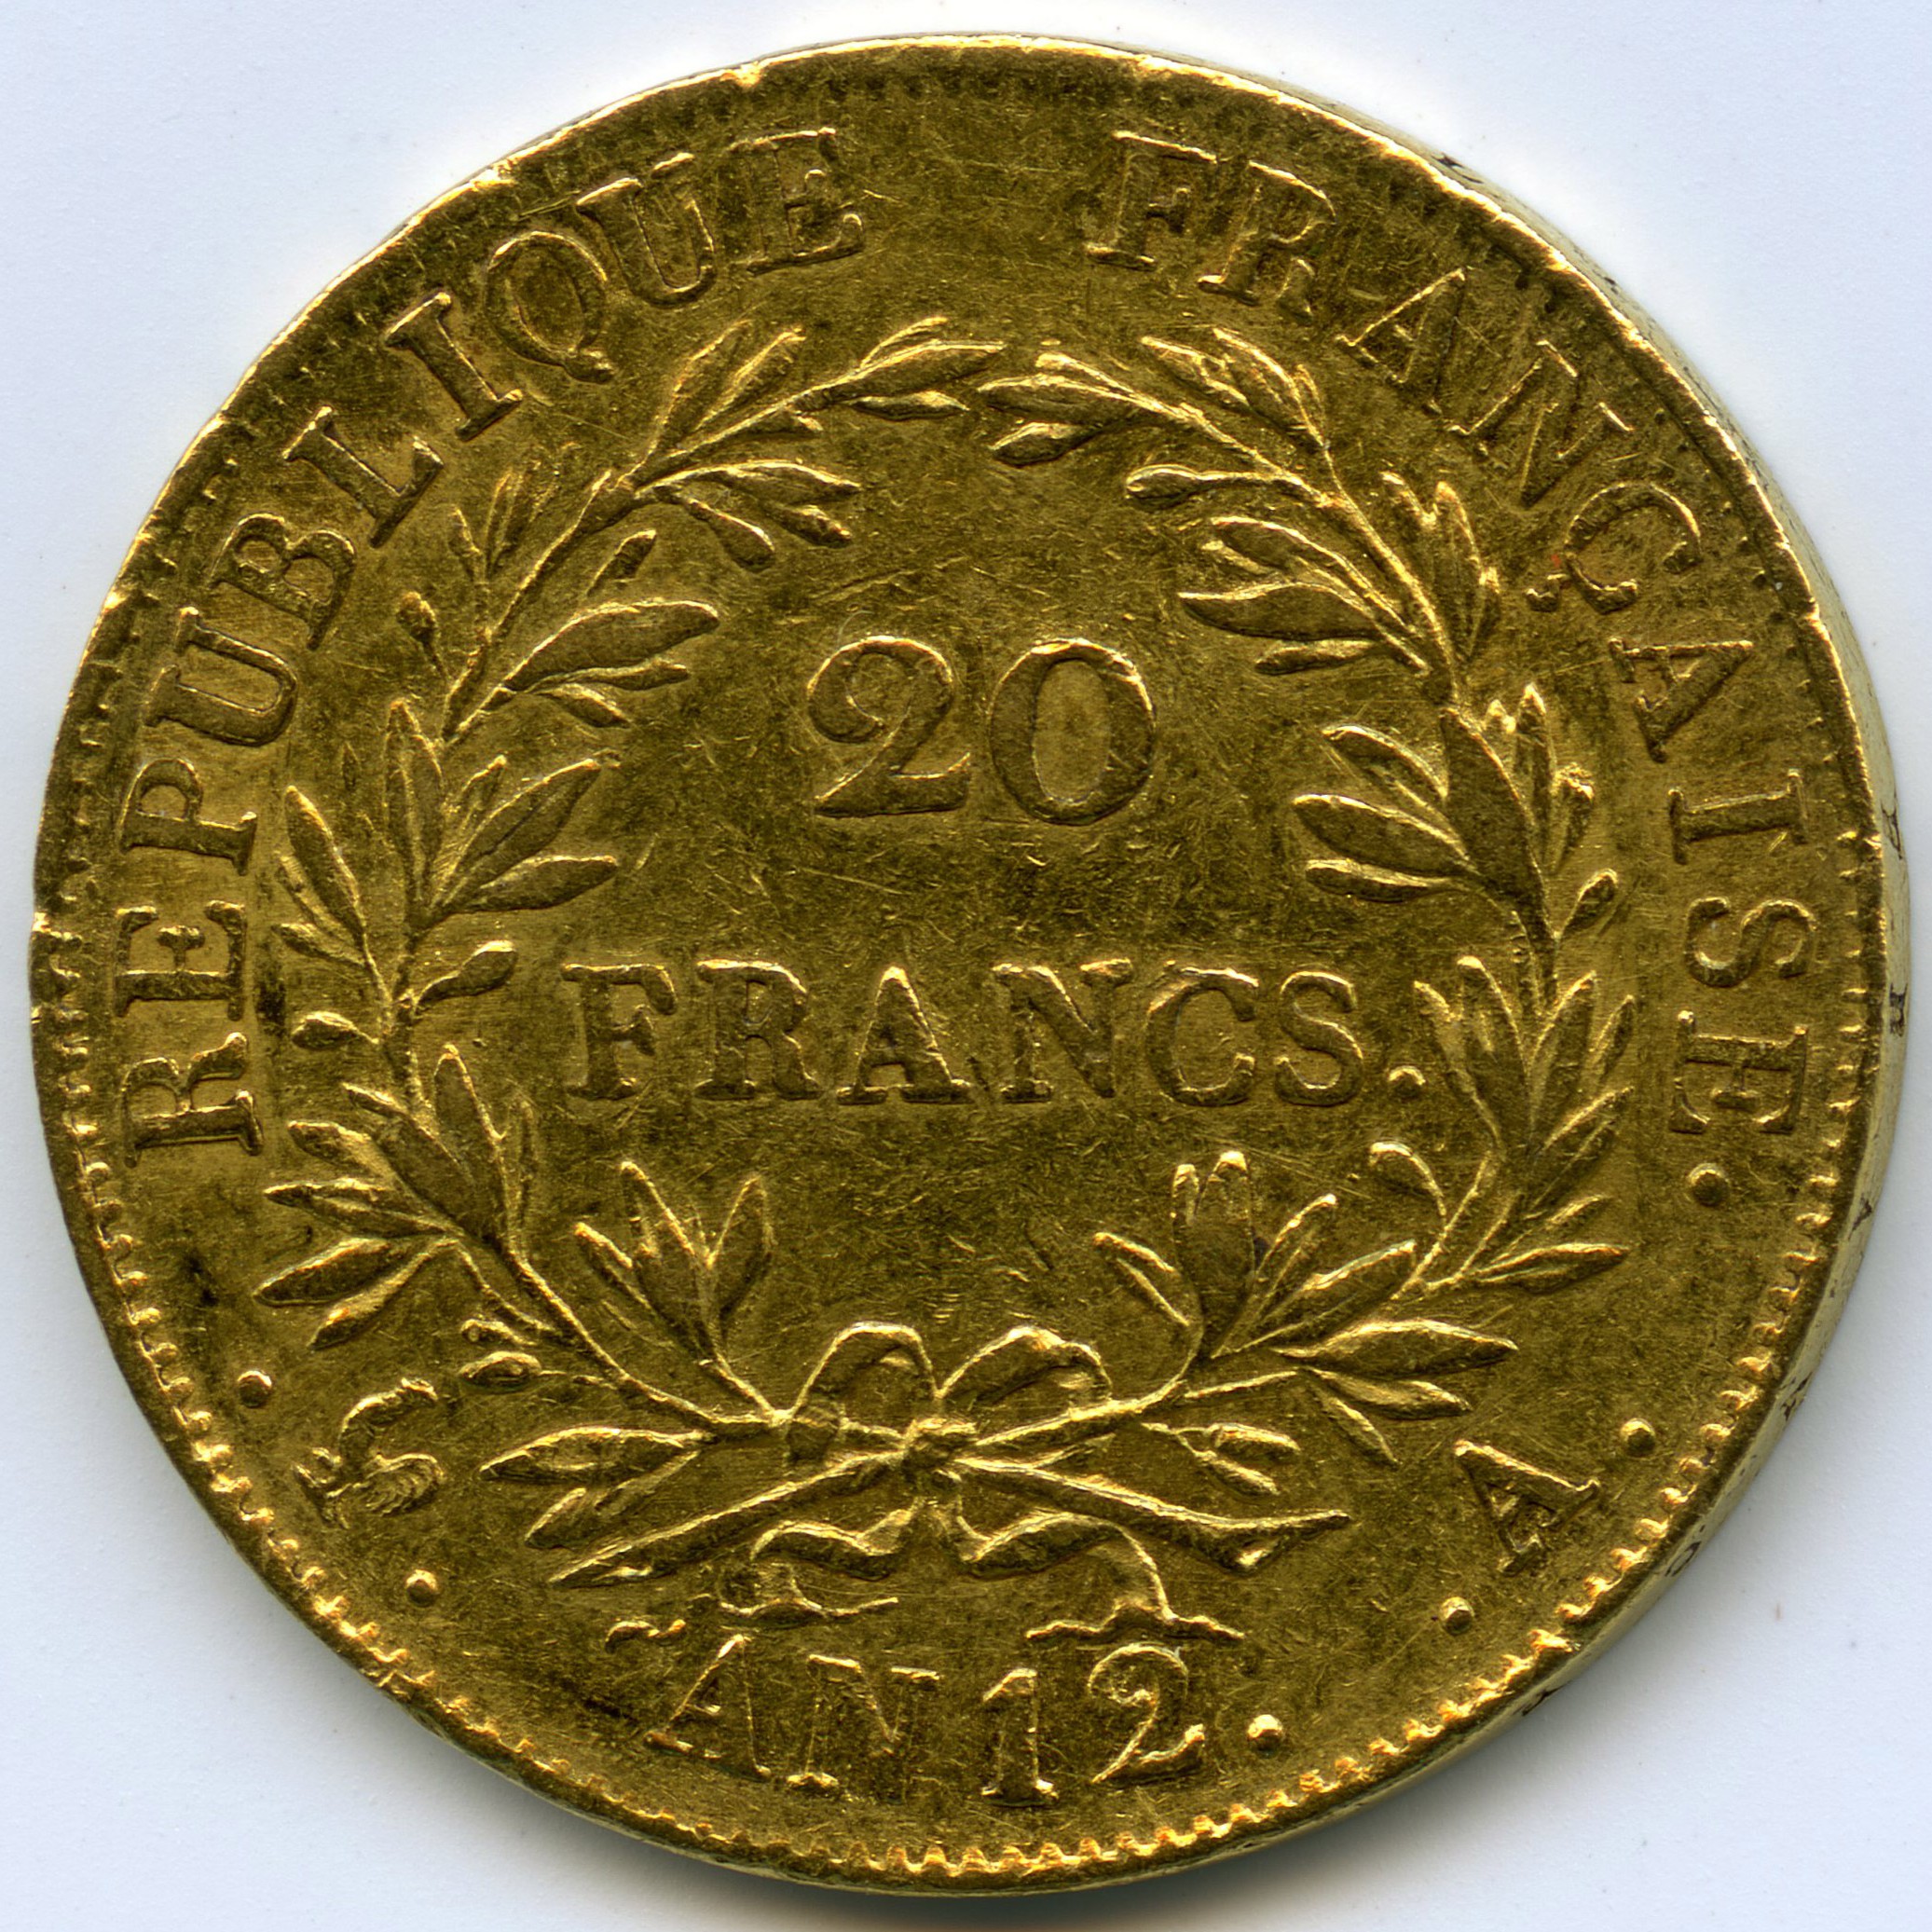 Napoléon Empereur - 20 Francs - An 12 revers